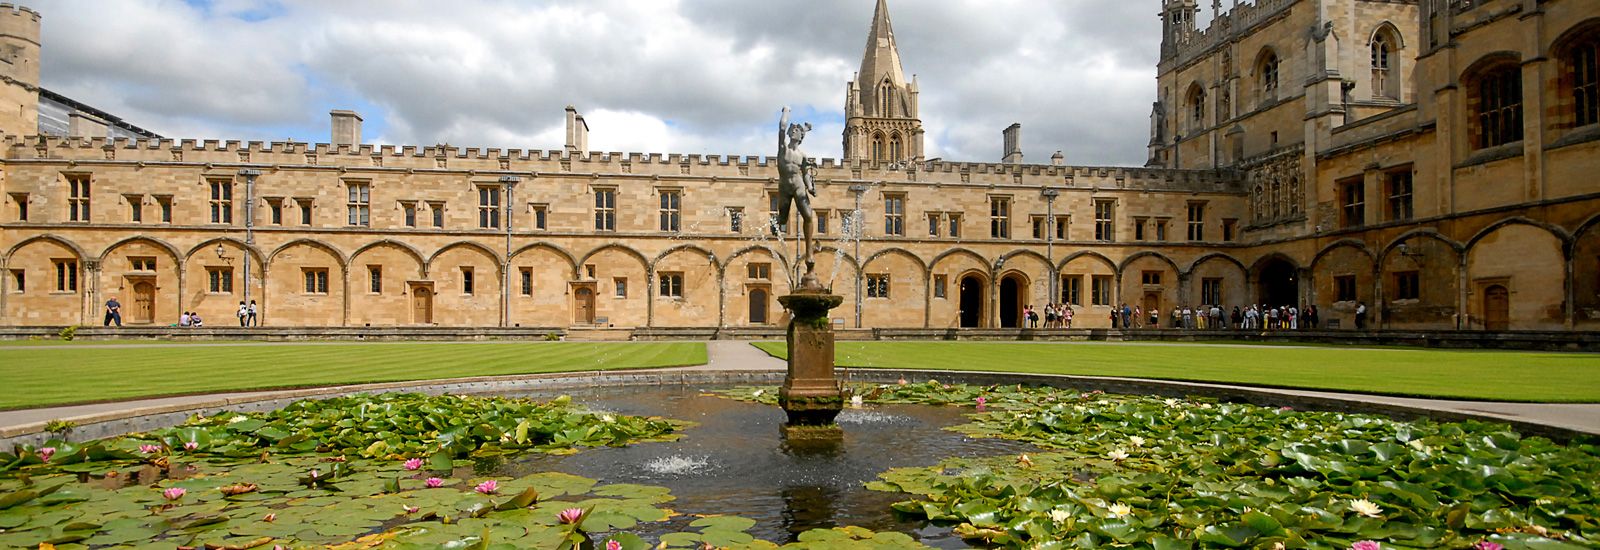 Christ Church | University of Oxford